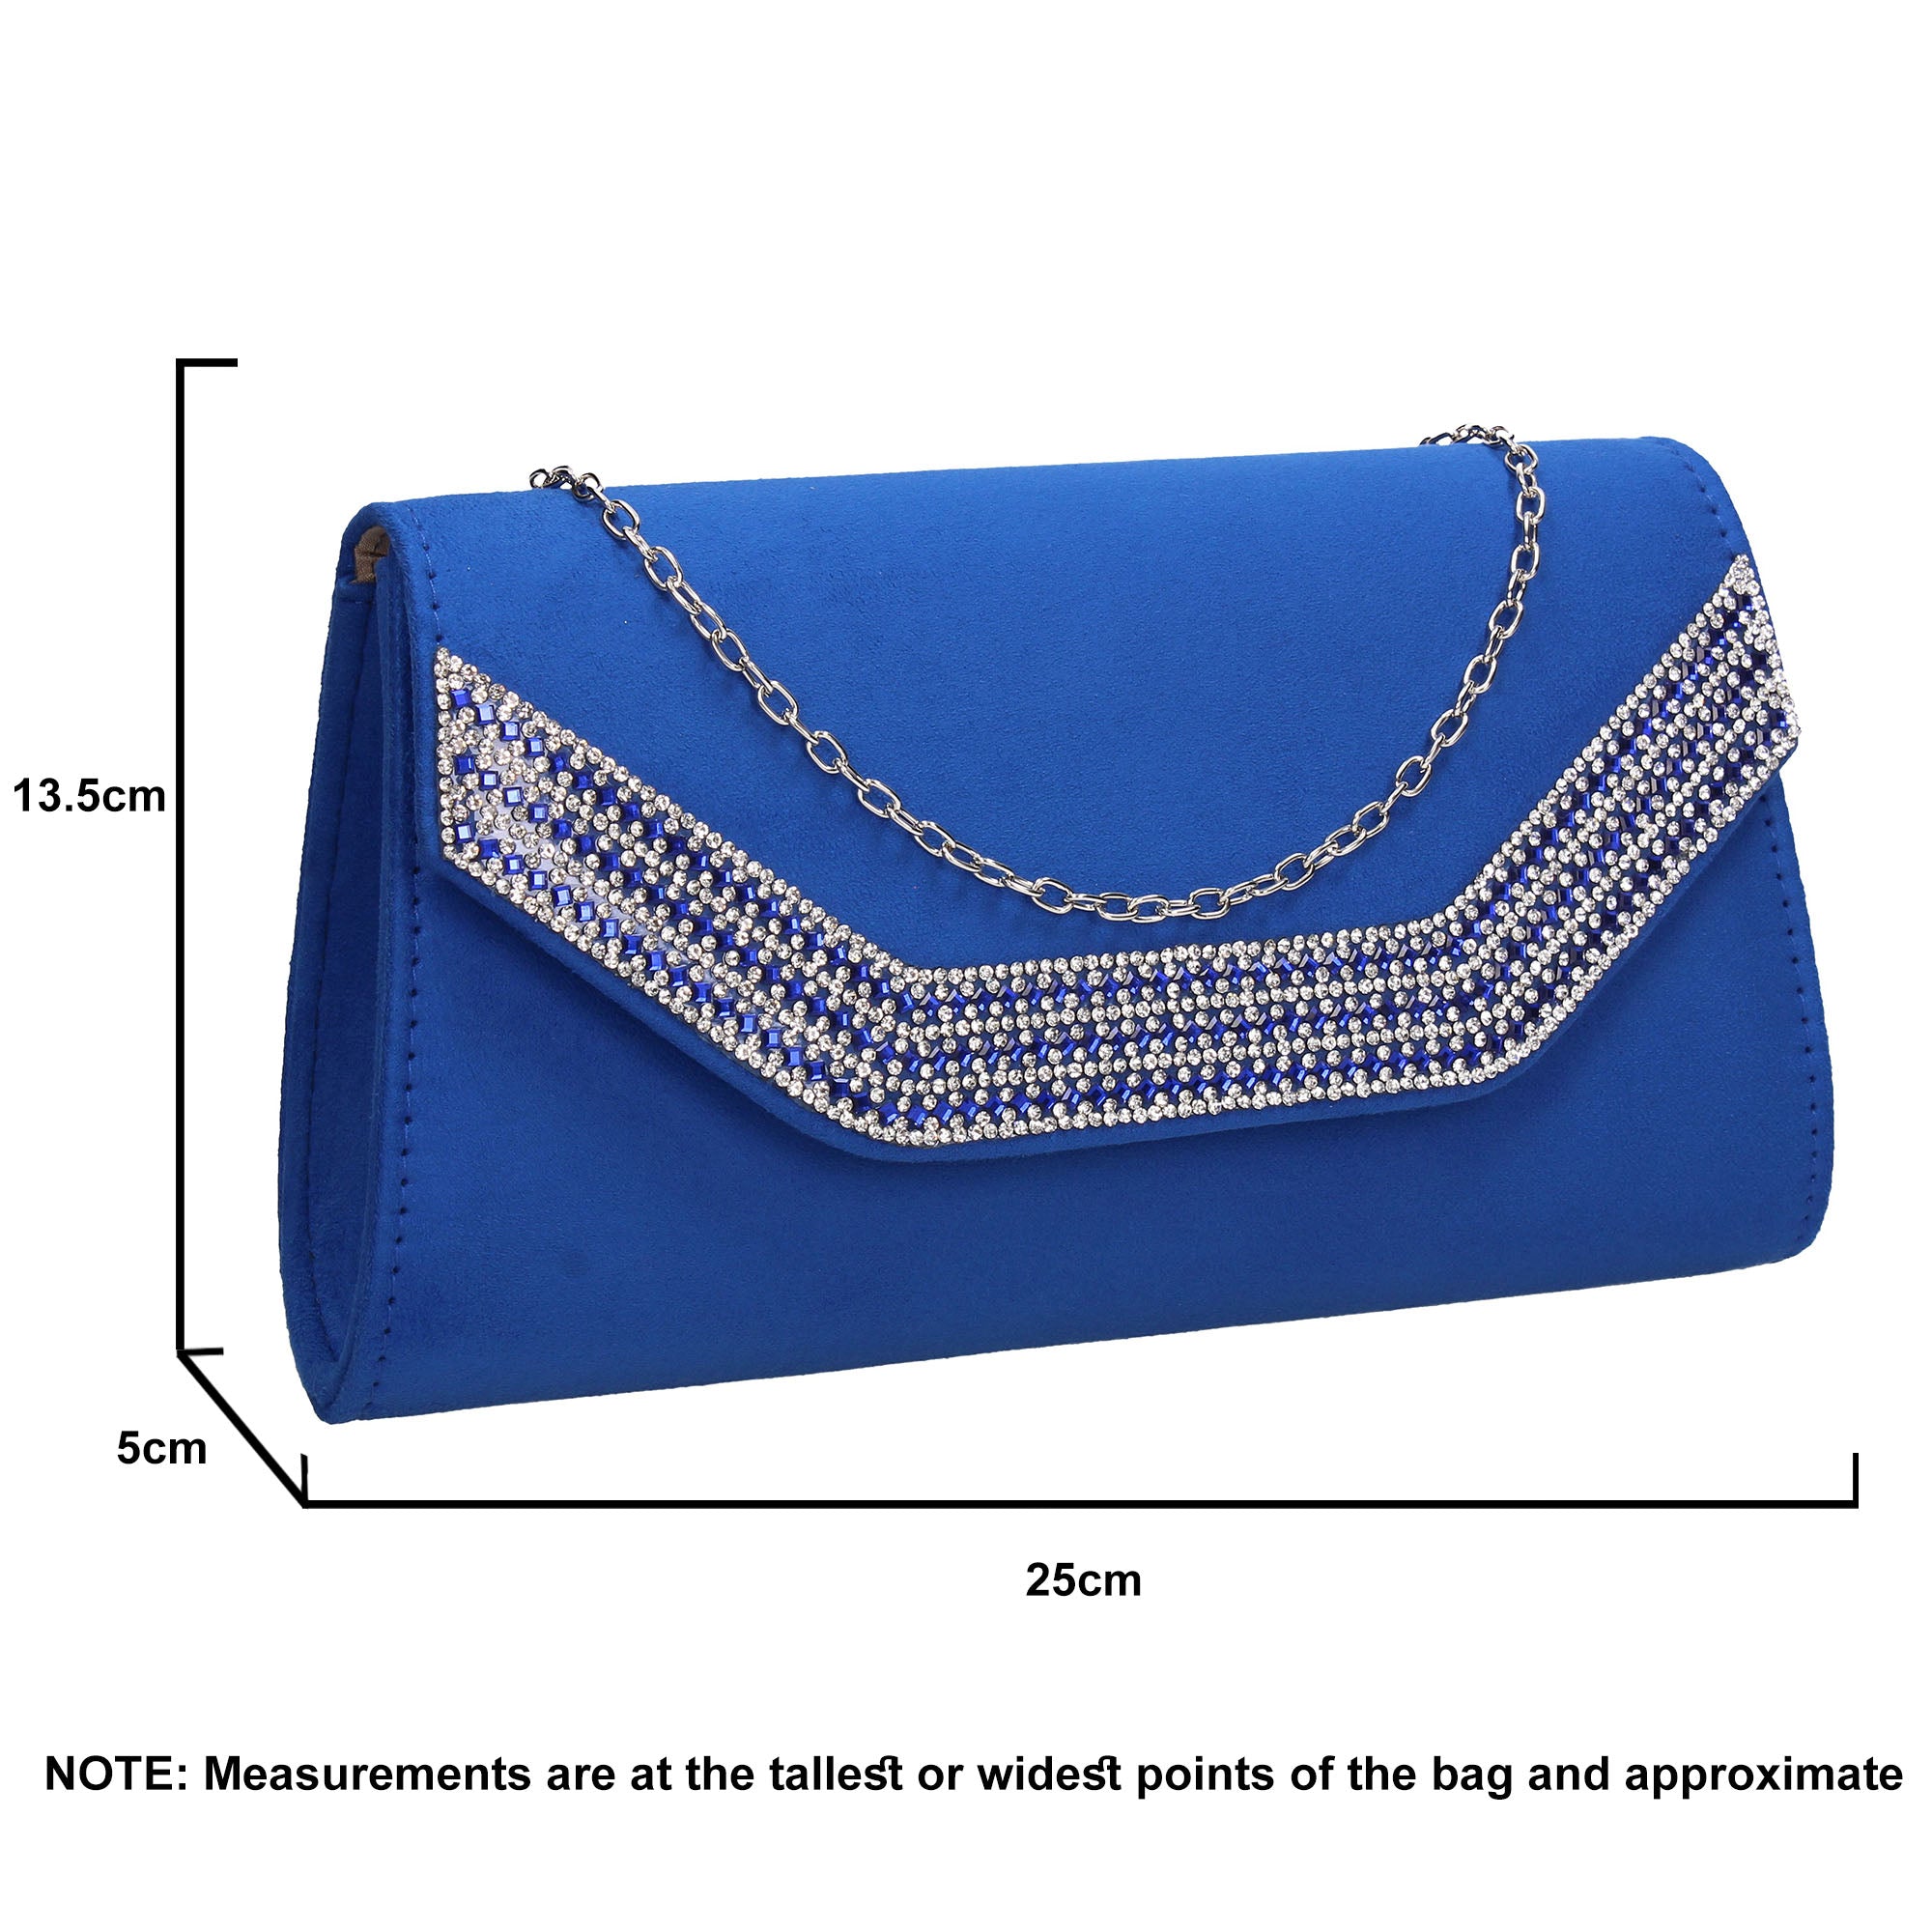 Soperwilton Royal Blue Handbag Purse 4 Piece Set | Blue handbags, Handbag,  Purses